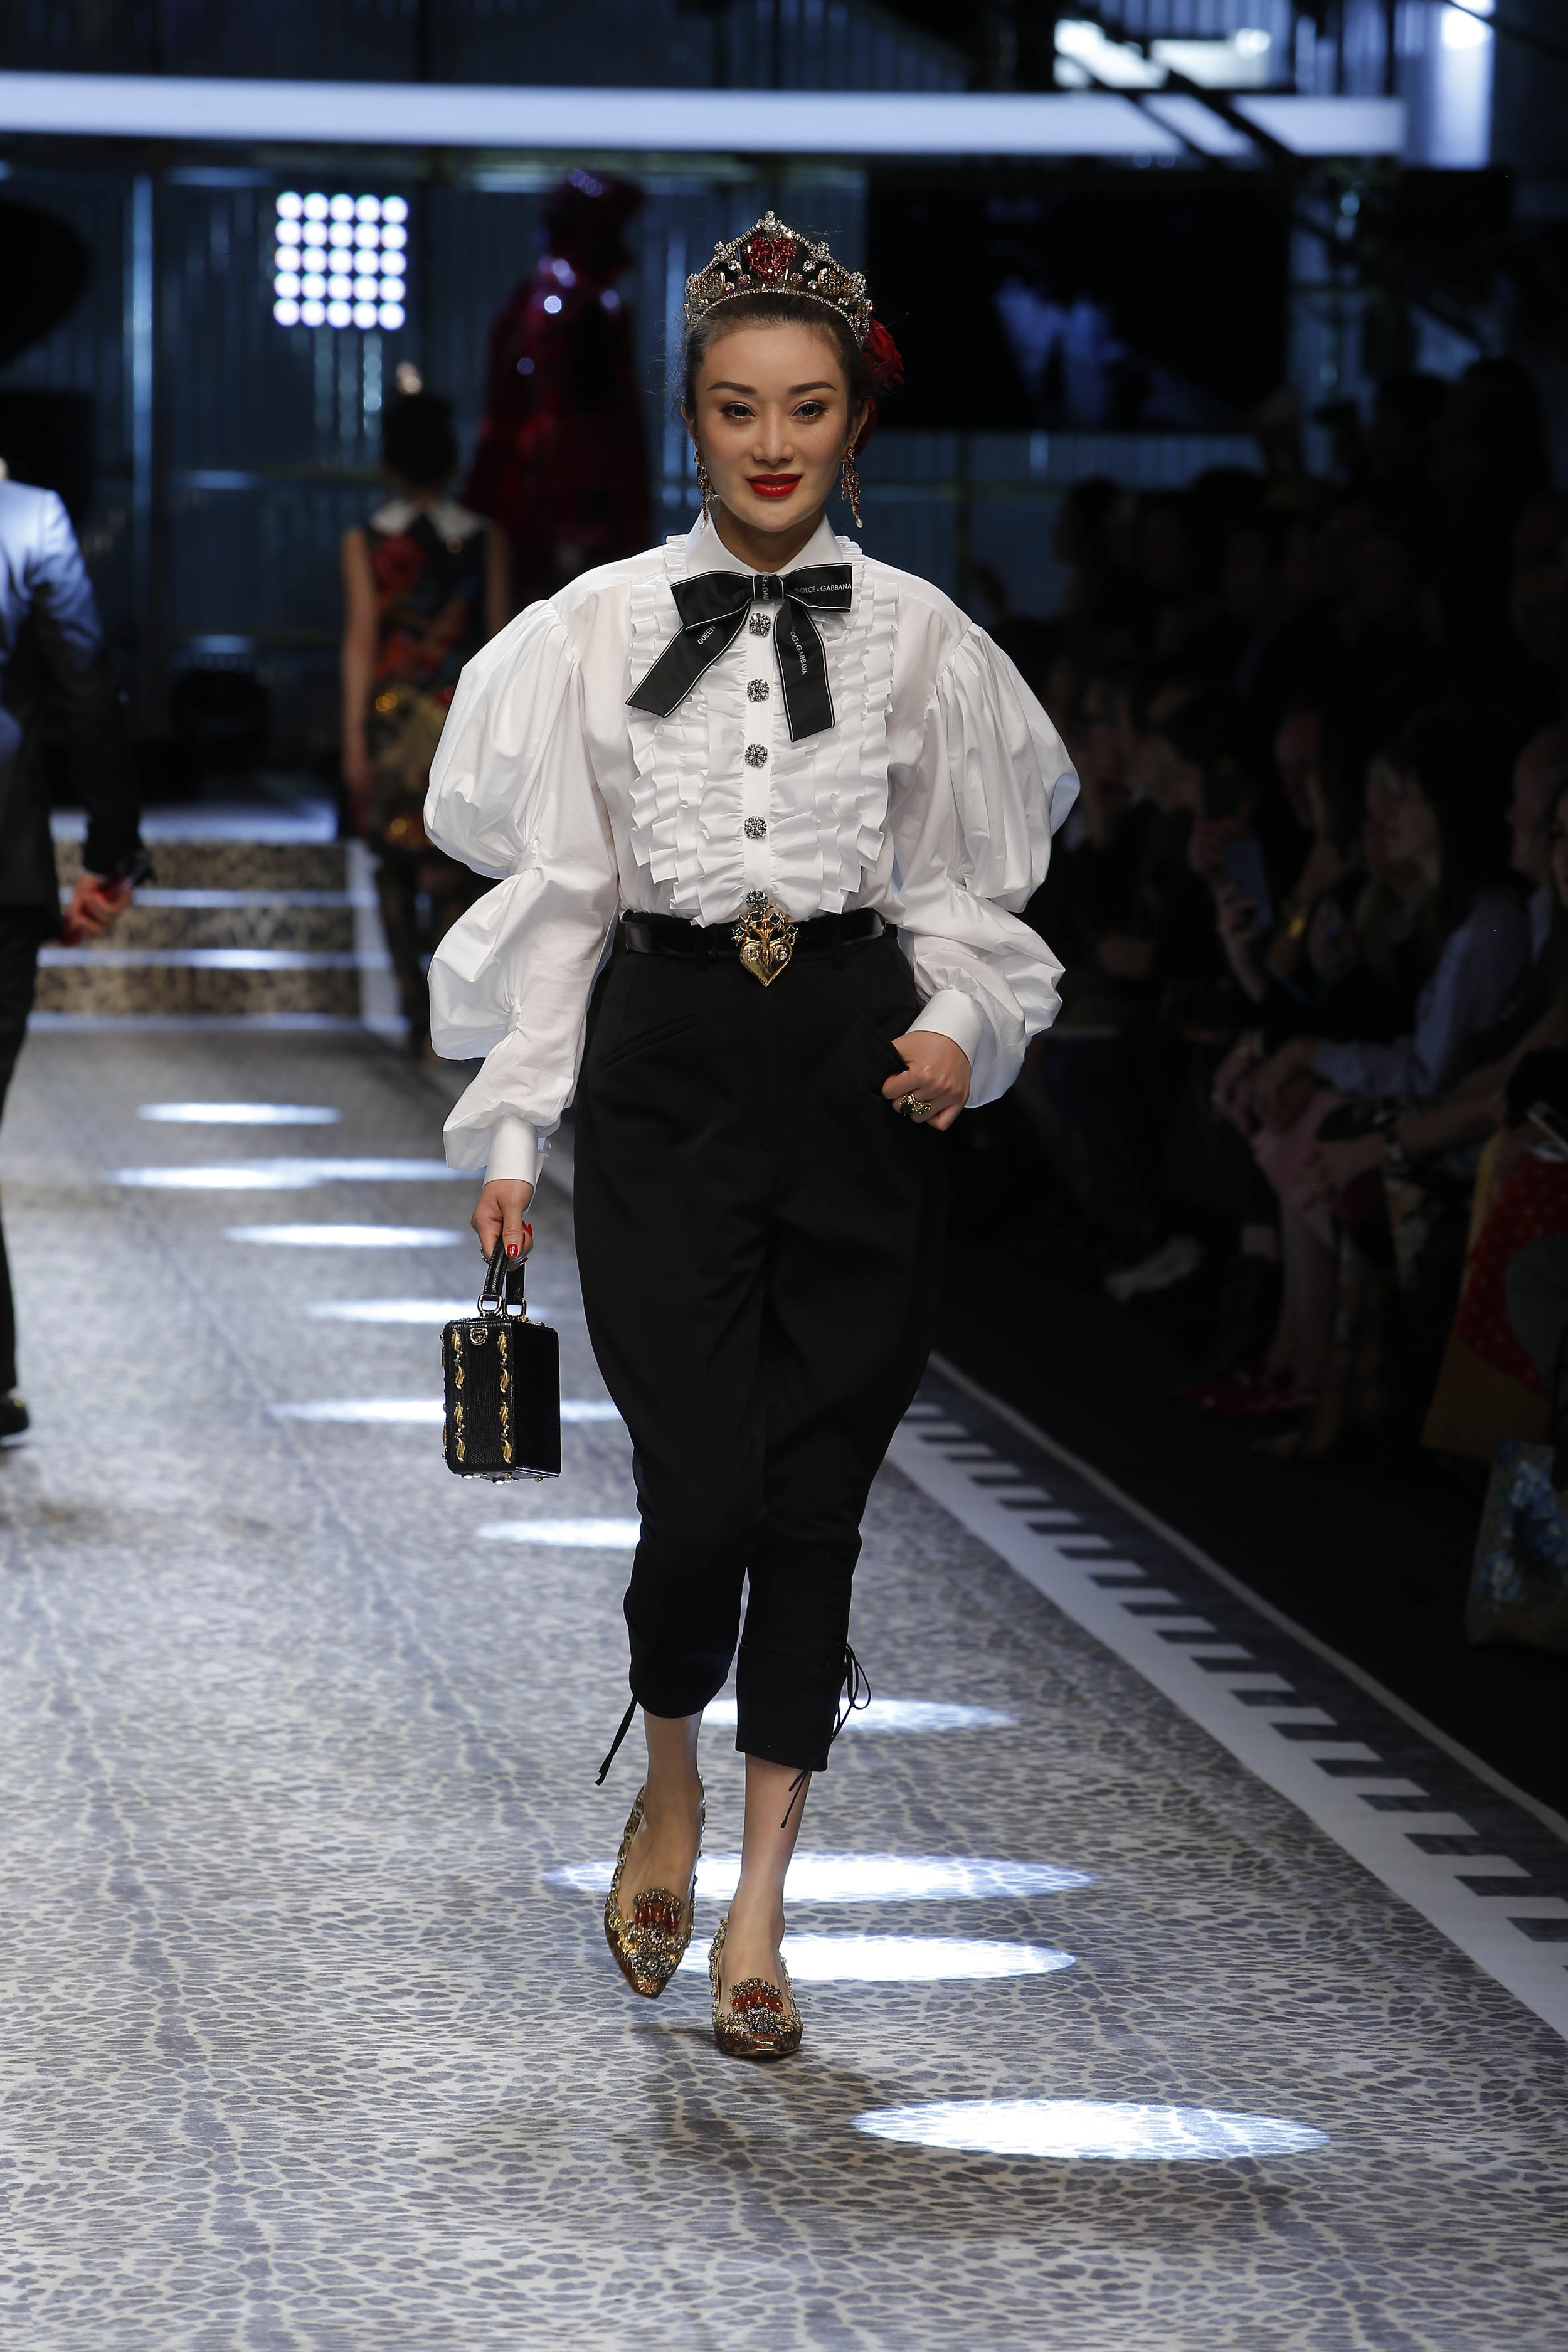 Dolce&Gabbana_women's fashion show fw17-18_Runway_images (89).jpg